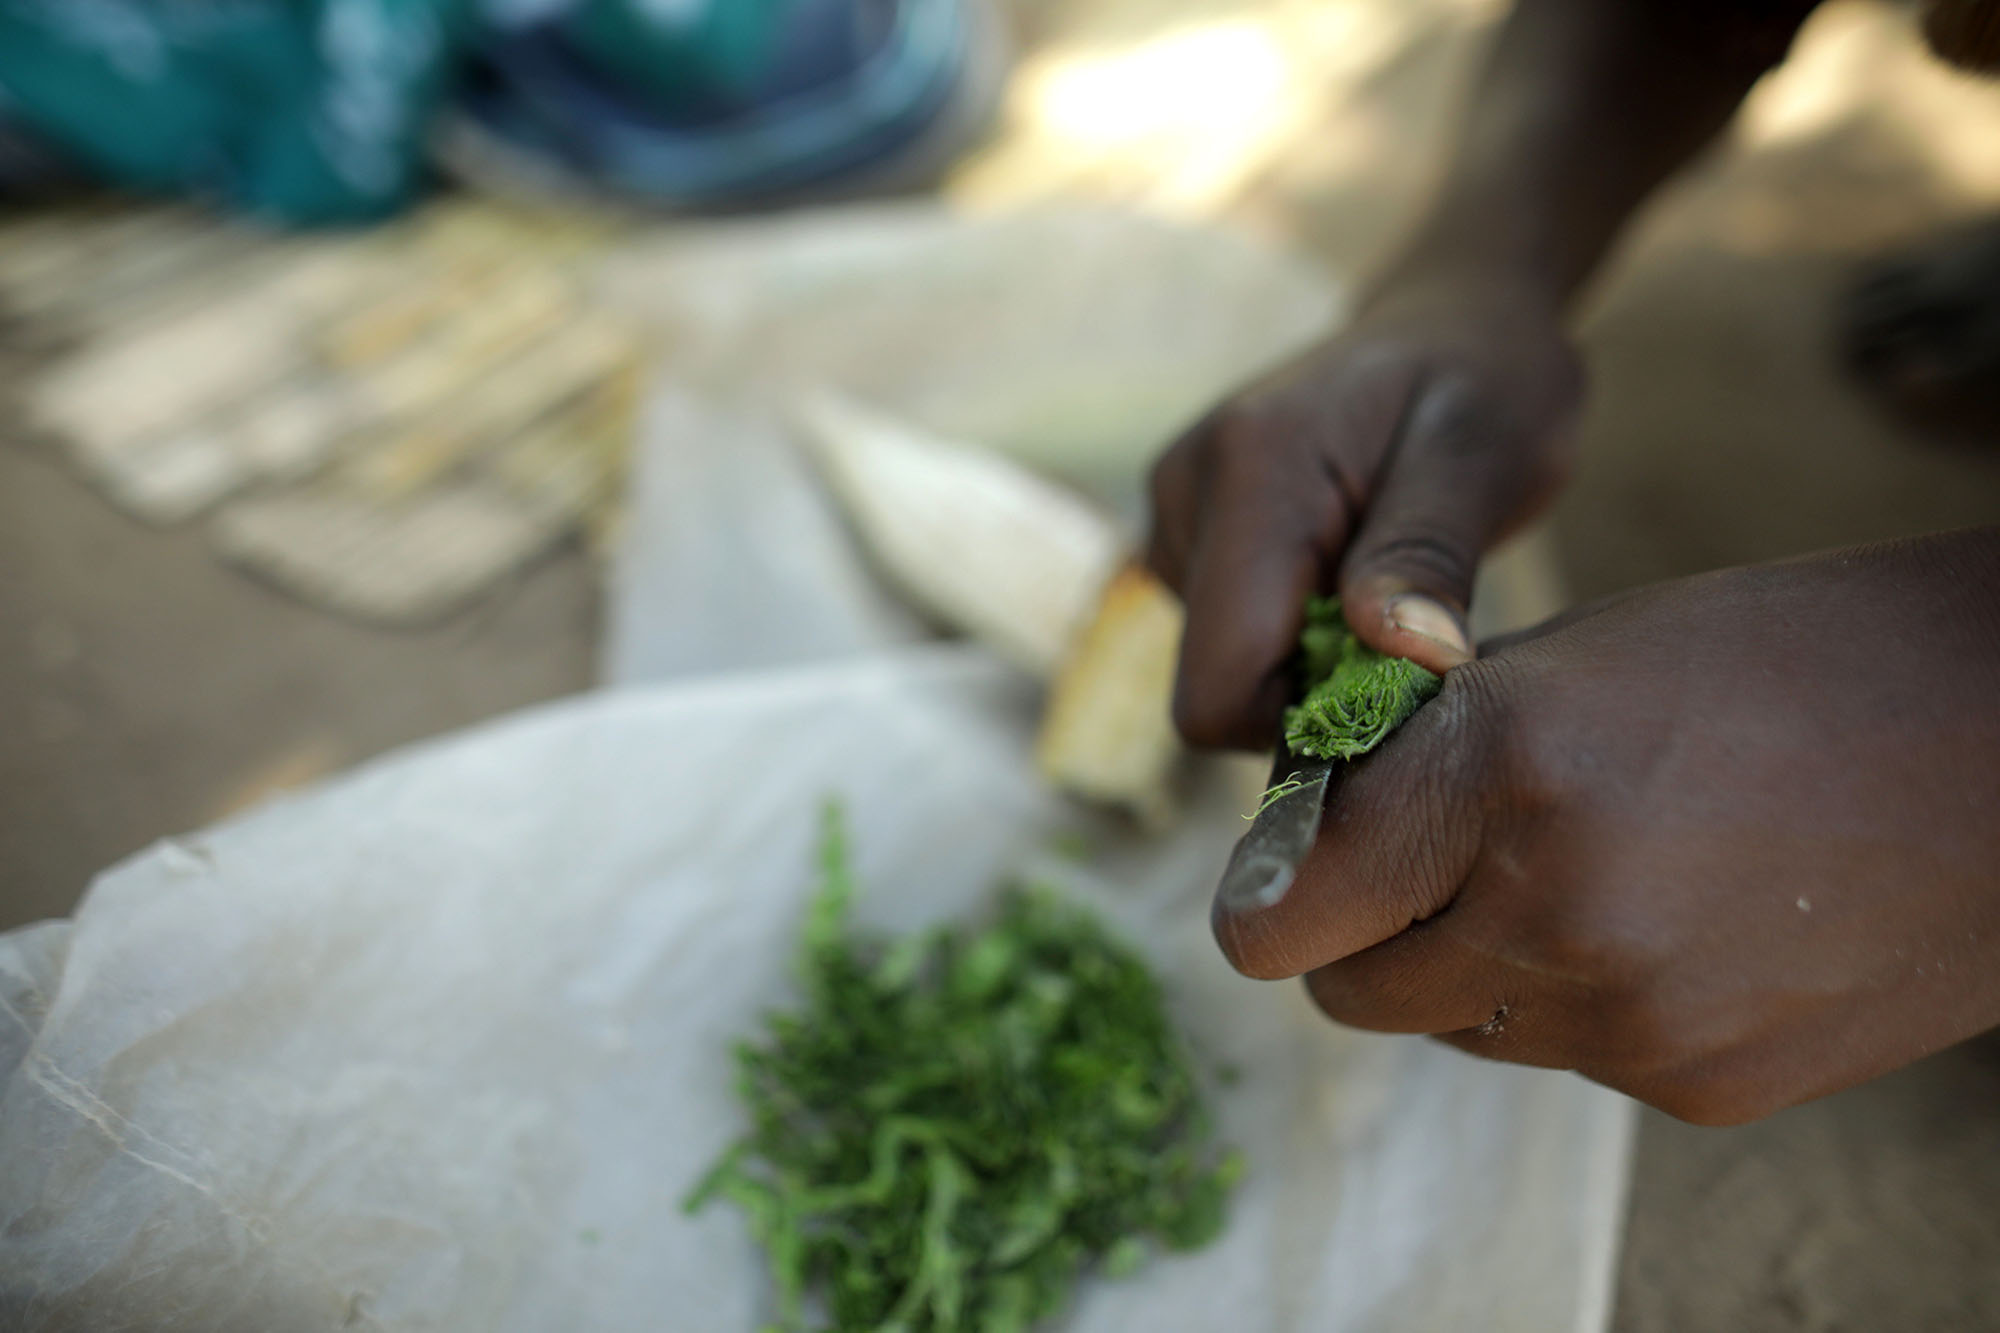  Mariam Chinguwo prepares food.&nbsp;Photo by Josh Estey 